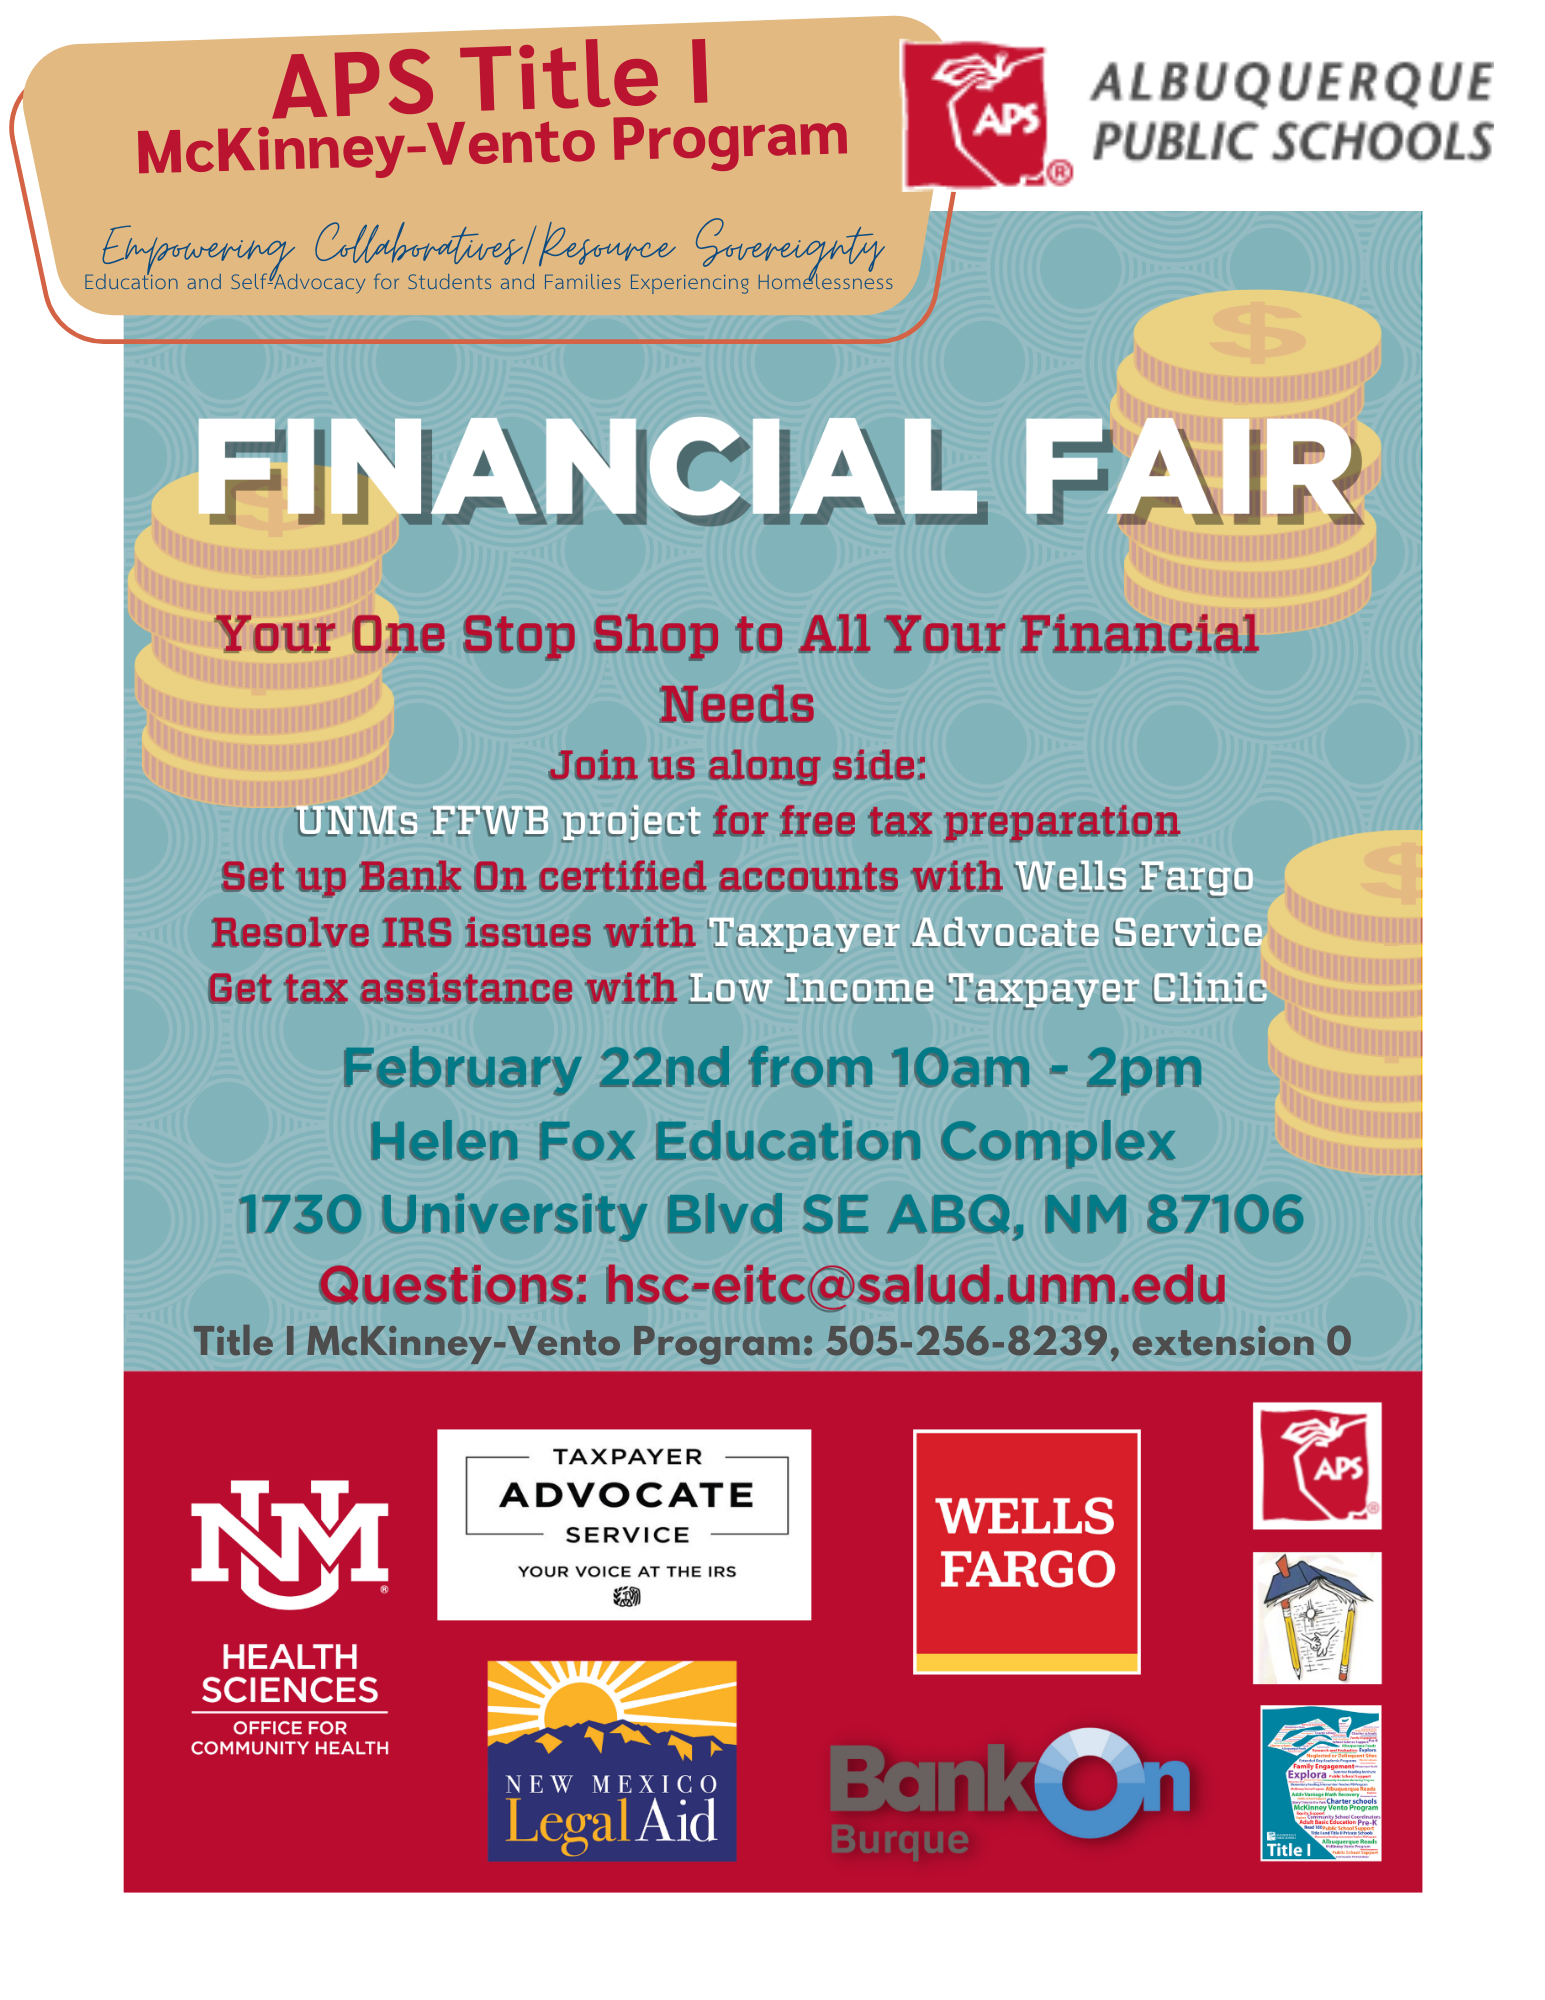 Albuquerque Public Schools Financial Fair flyer